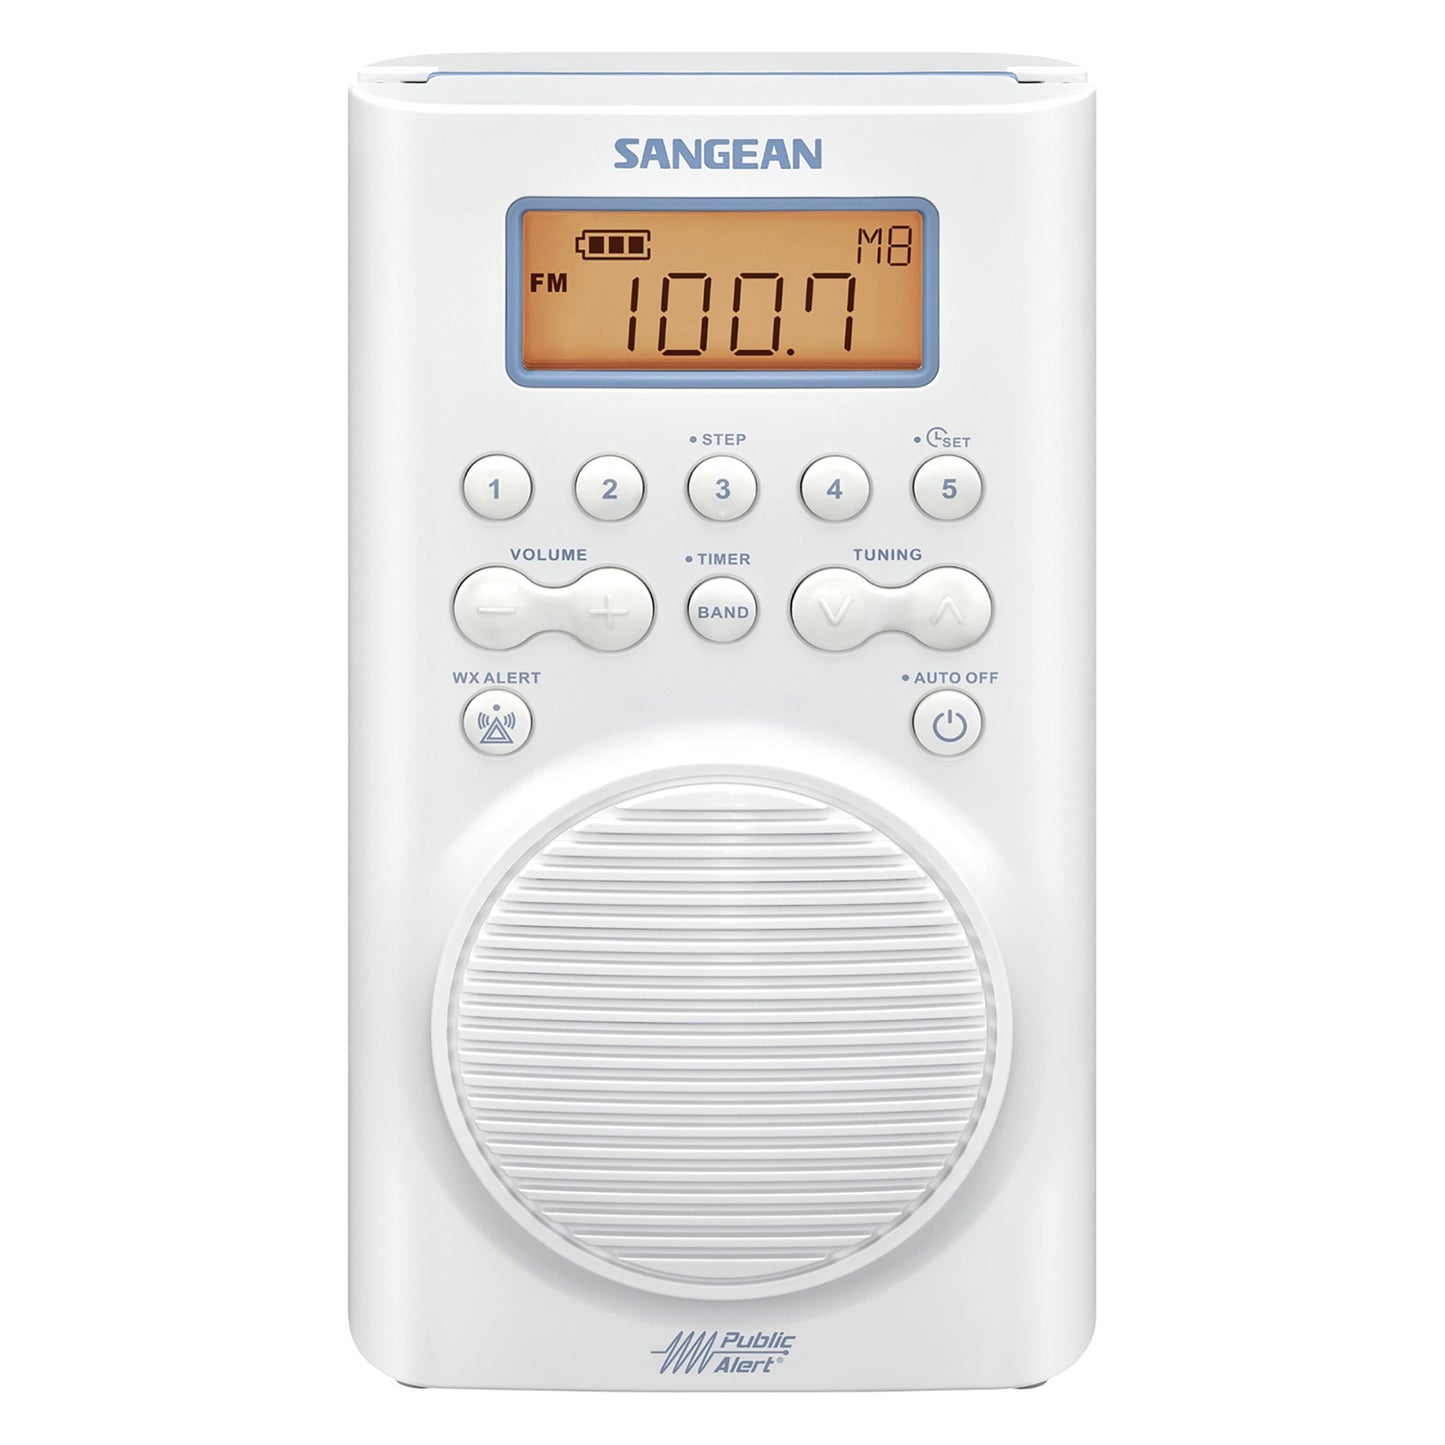 SANGEAN SNGH205 Portable 3-Band AM/FM Waterproof Shower Clock Radio